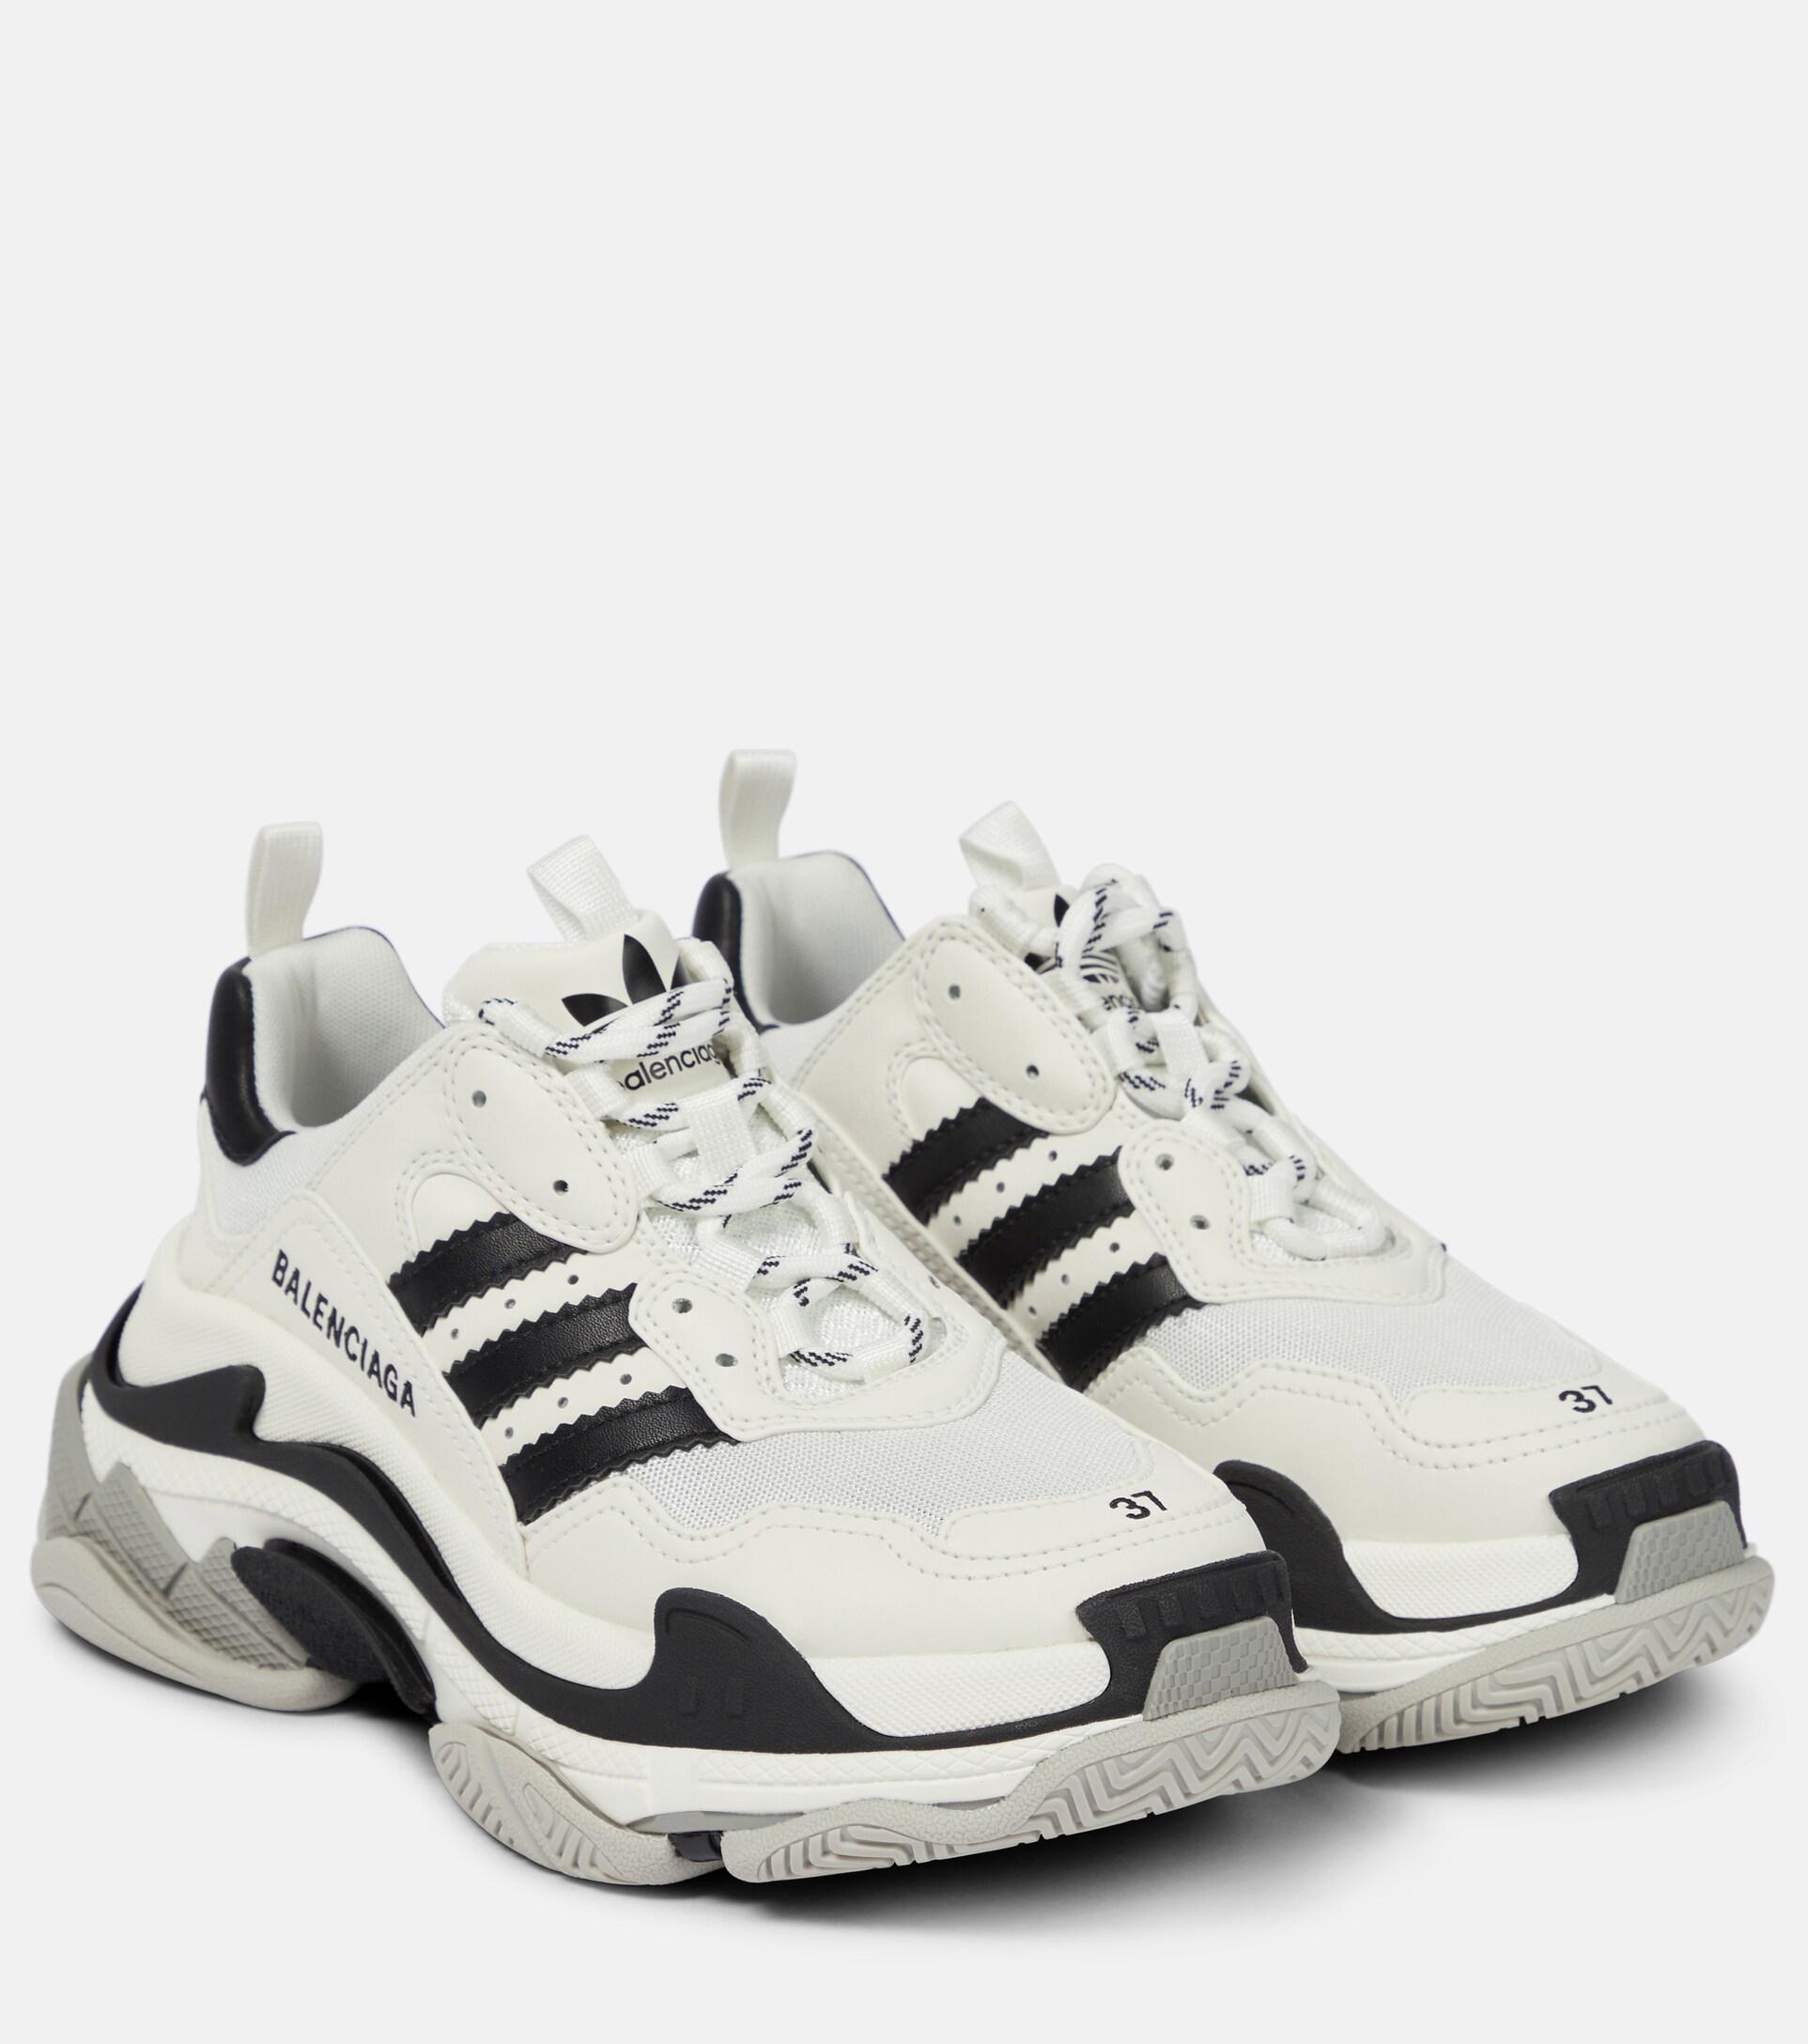 Balenciaga x Adidas Triple S Sneaker Collab Release Date  Sole Collector